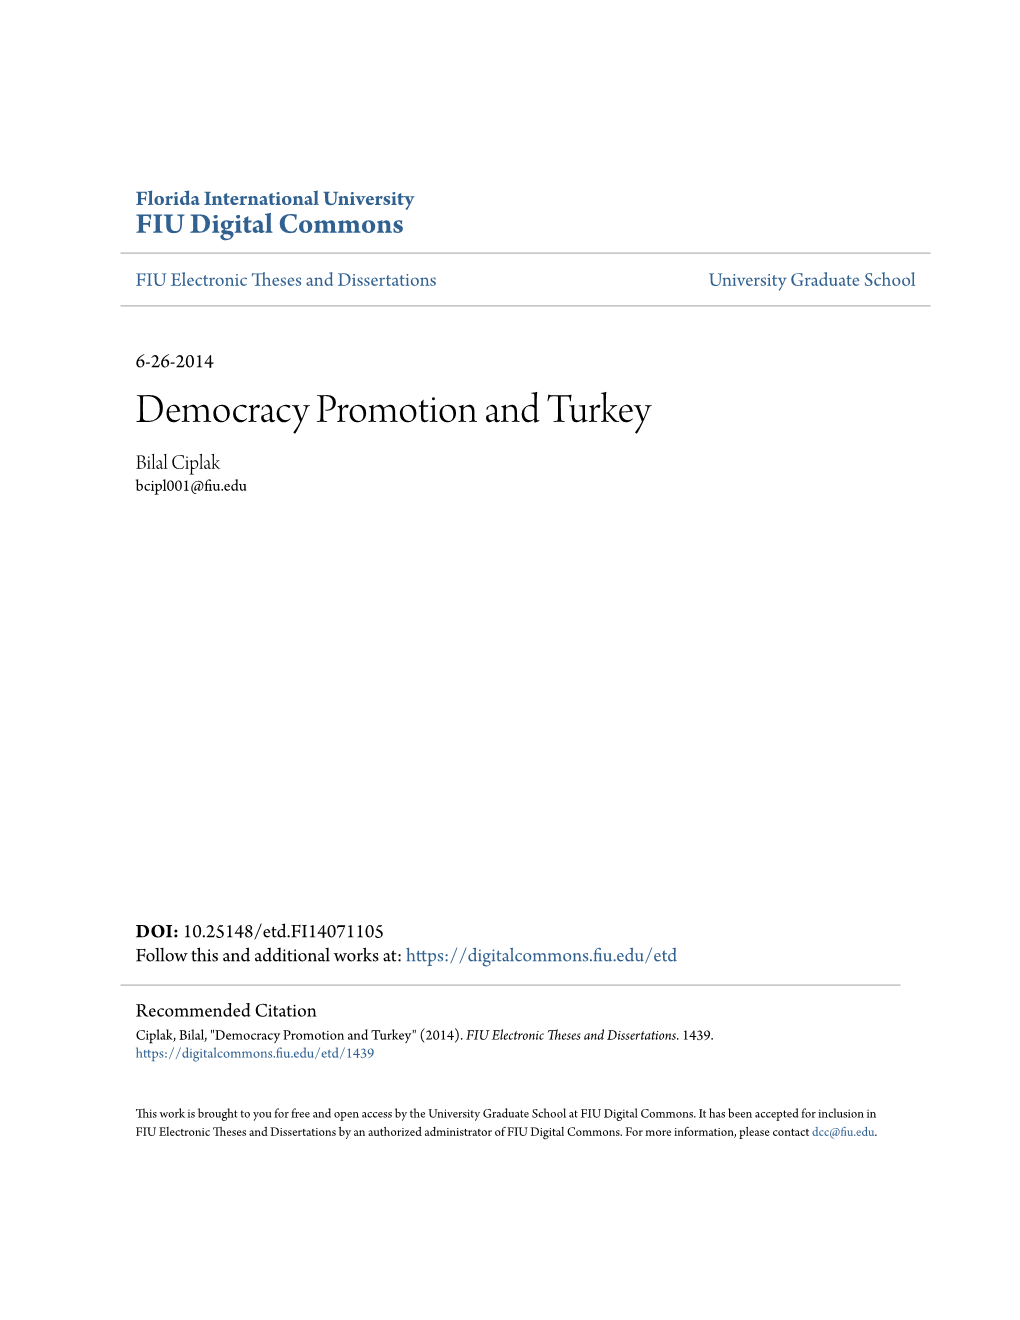 Democracy Promotion and Turkey Bilal Ciplak Bcipl001@Fiu.Edu